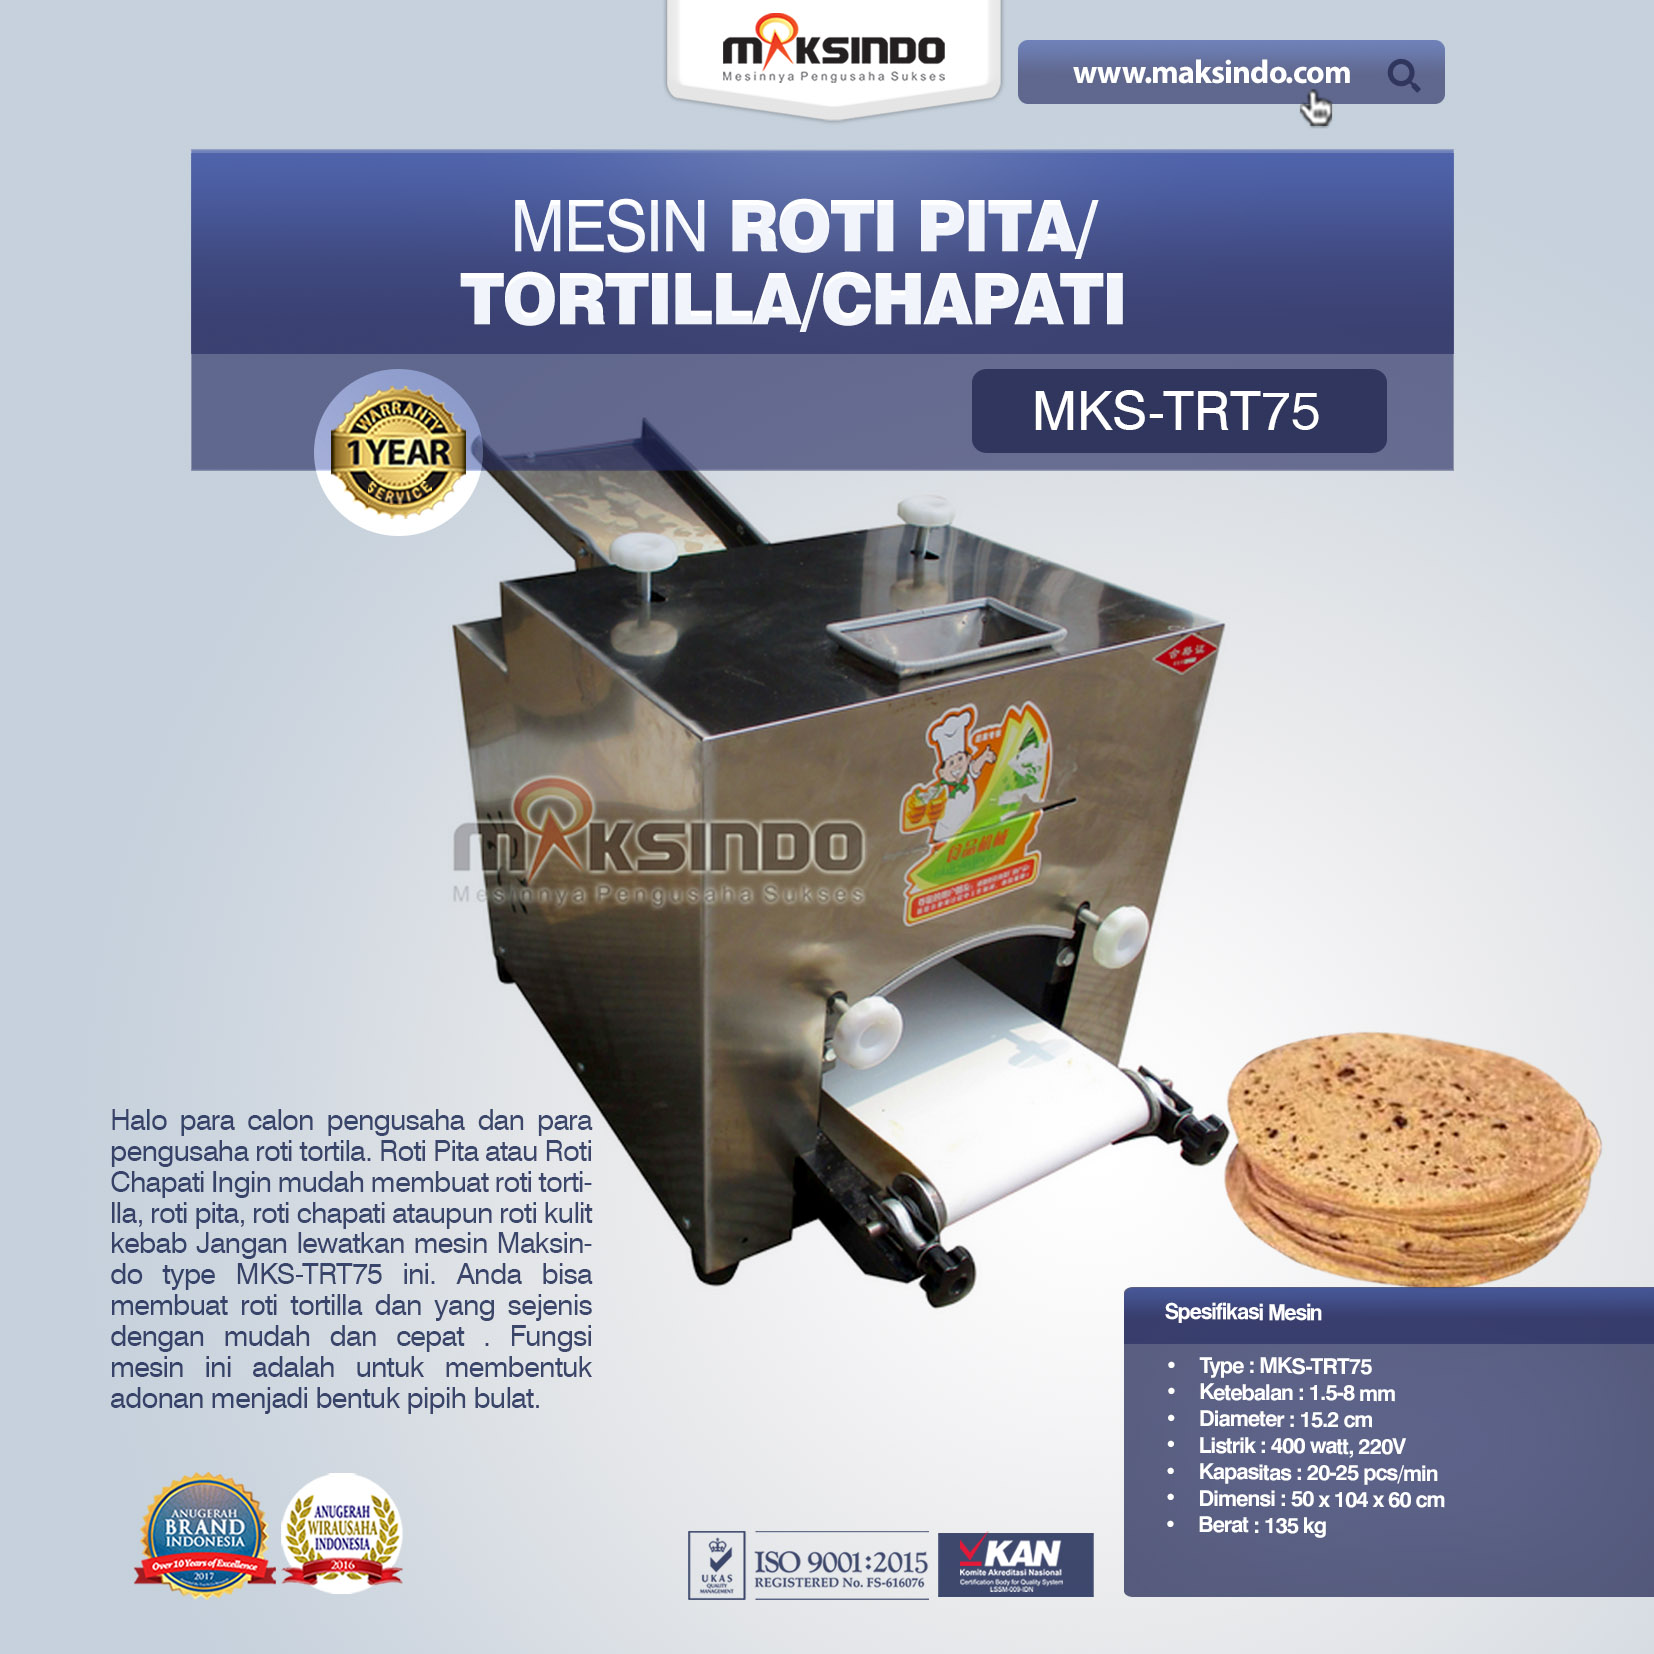 Jaul Mesin Roti Pita/Tortilla/Chapati MKS-TRT75 Di Banjarmasin